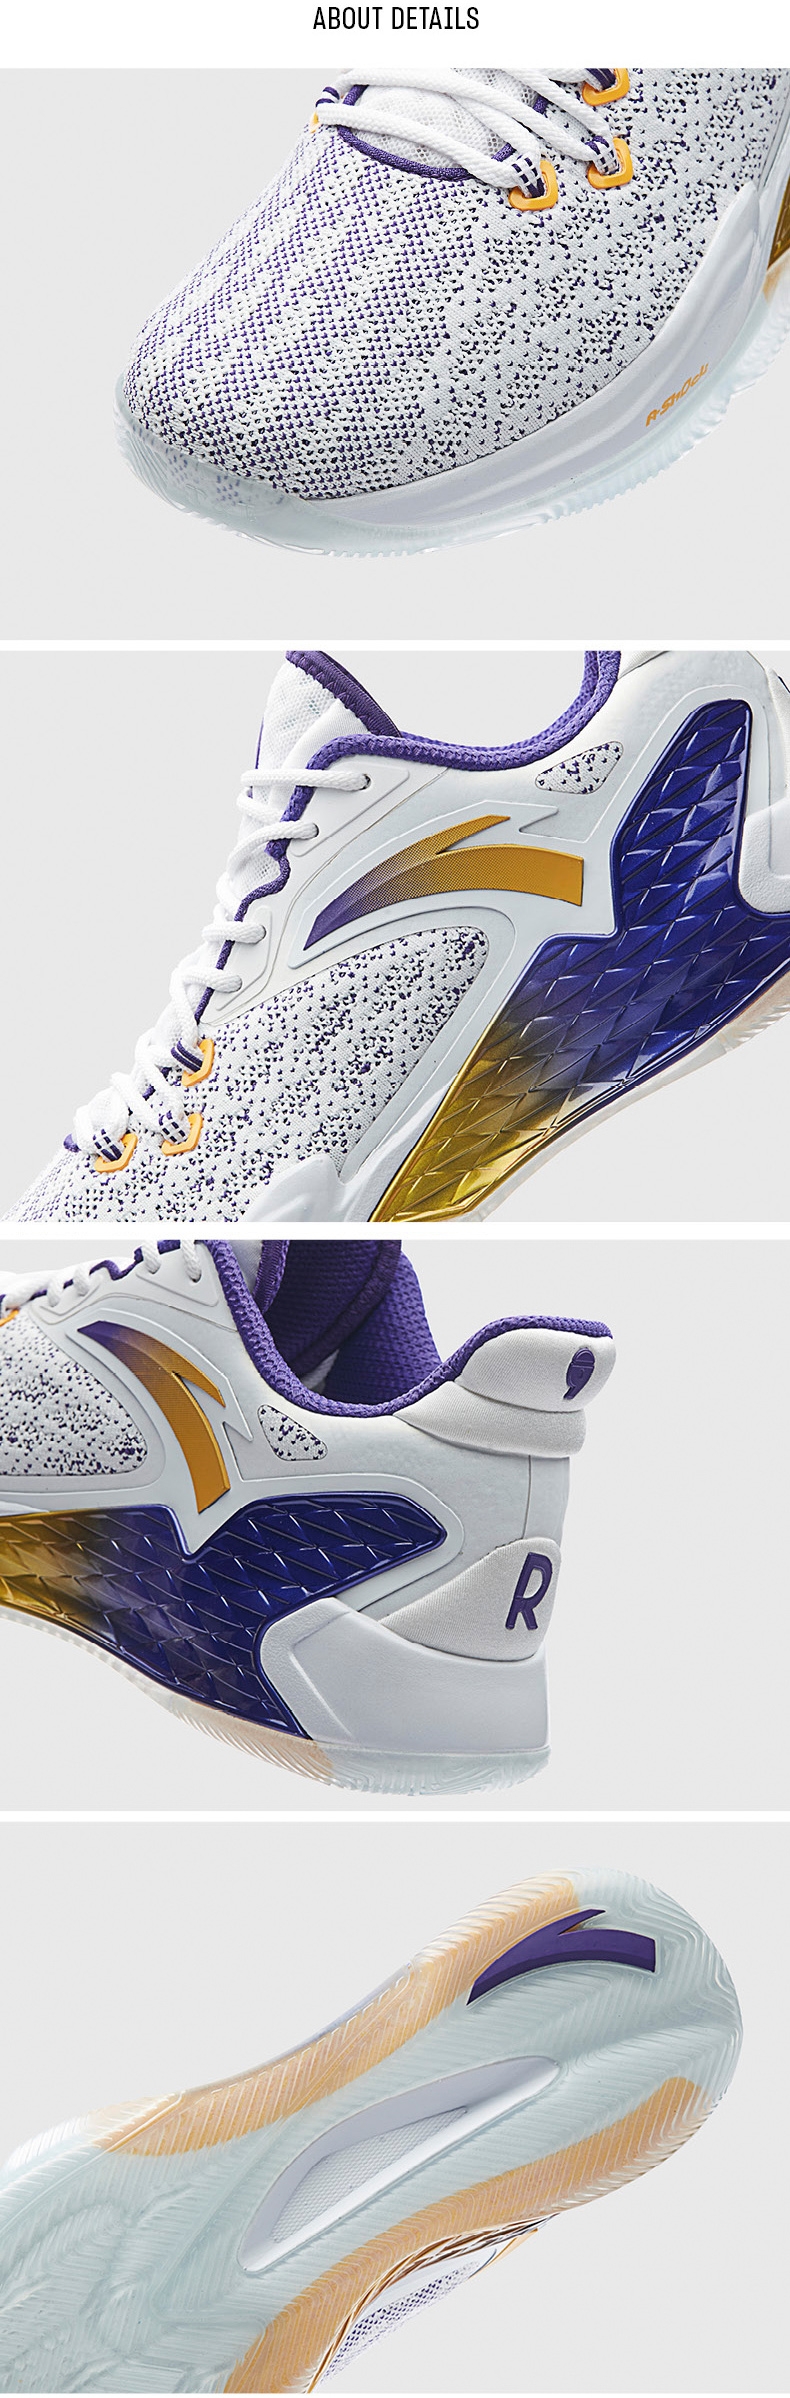 2019 Summer Anta Rajon Rondo RR5 Lakers NBA Basketball Shoes - White/Purple/Yellow